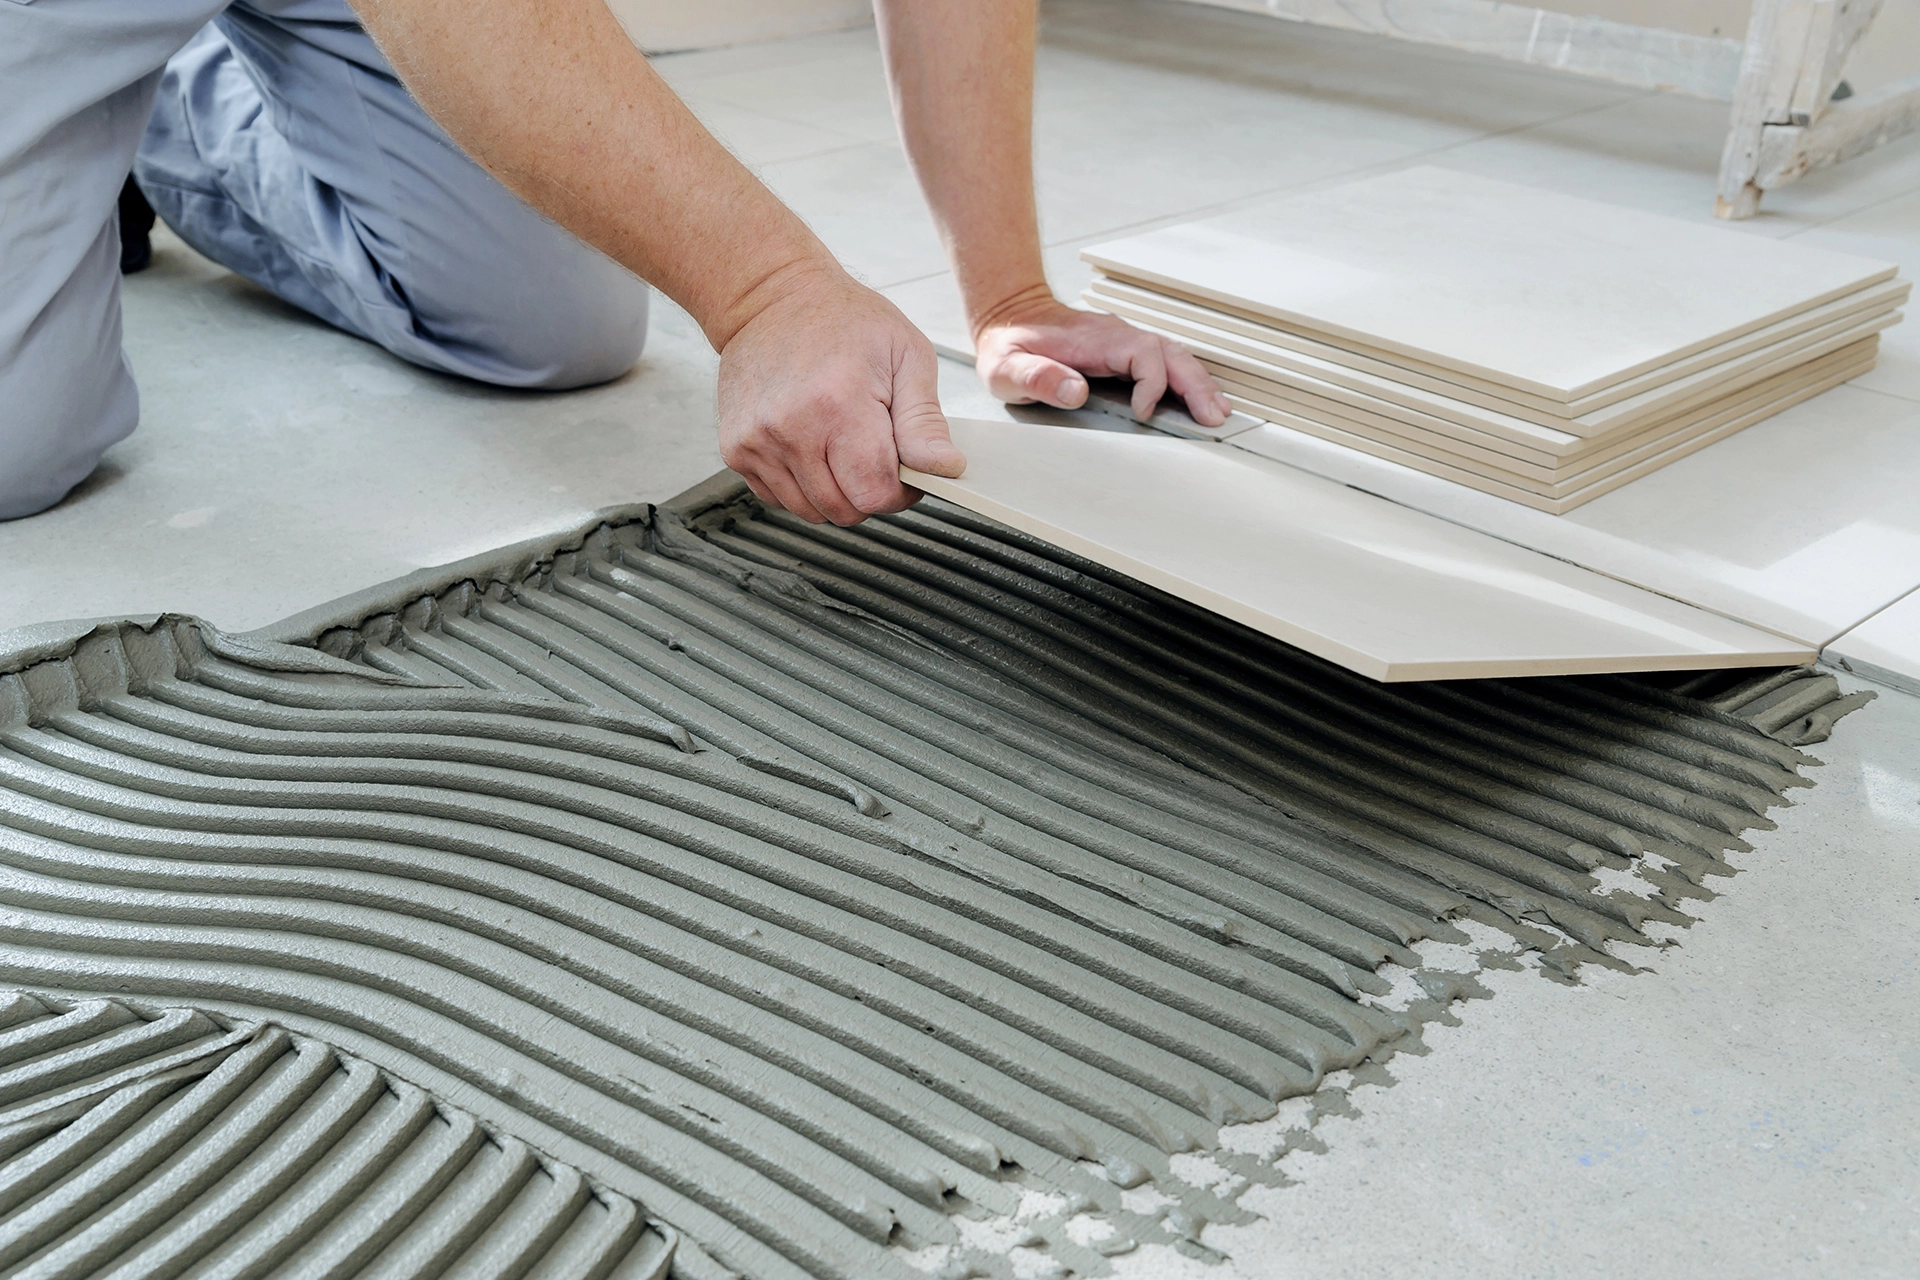 Bathroom Kitchen Tiling Costs In 2022, Porcelain Floor Tile Installation Cost Per Square Foot